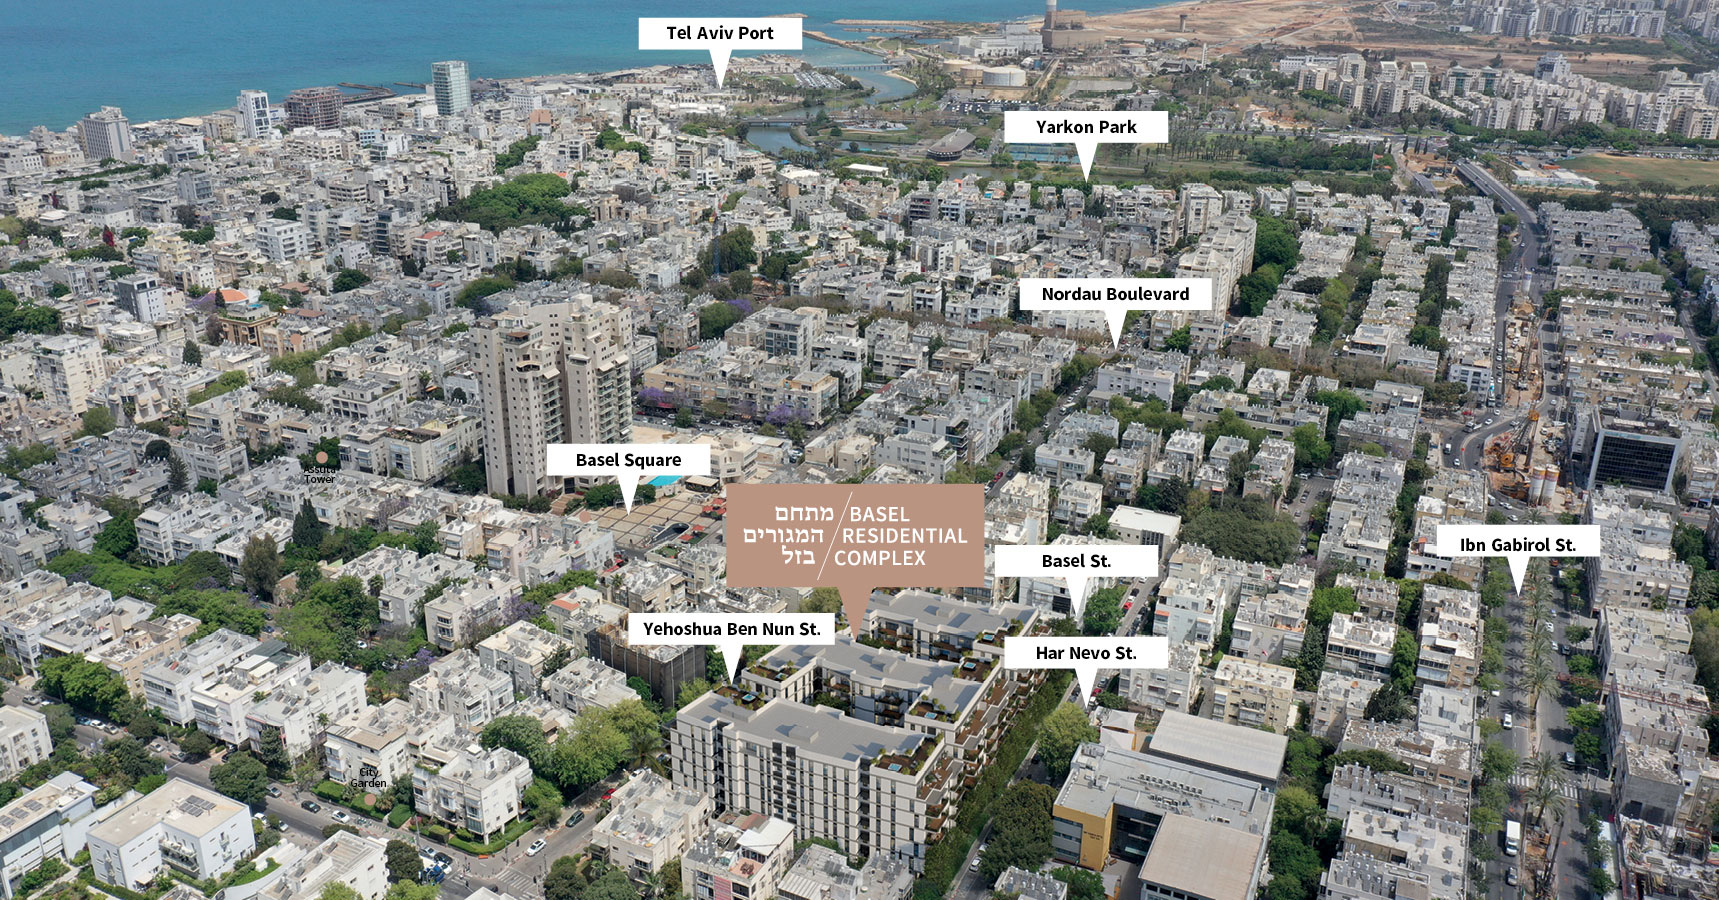 Basel Tel Aviv near Bazel, Joshua Ben Nun, Har Nevo, Ibn Gvirol, Nordau Blvd., Hayarkon Park, Tel Aviv Port